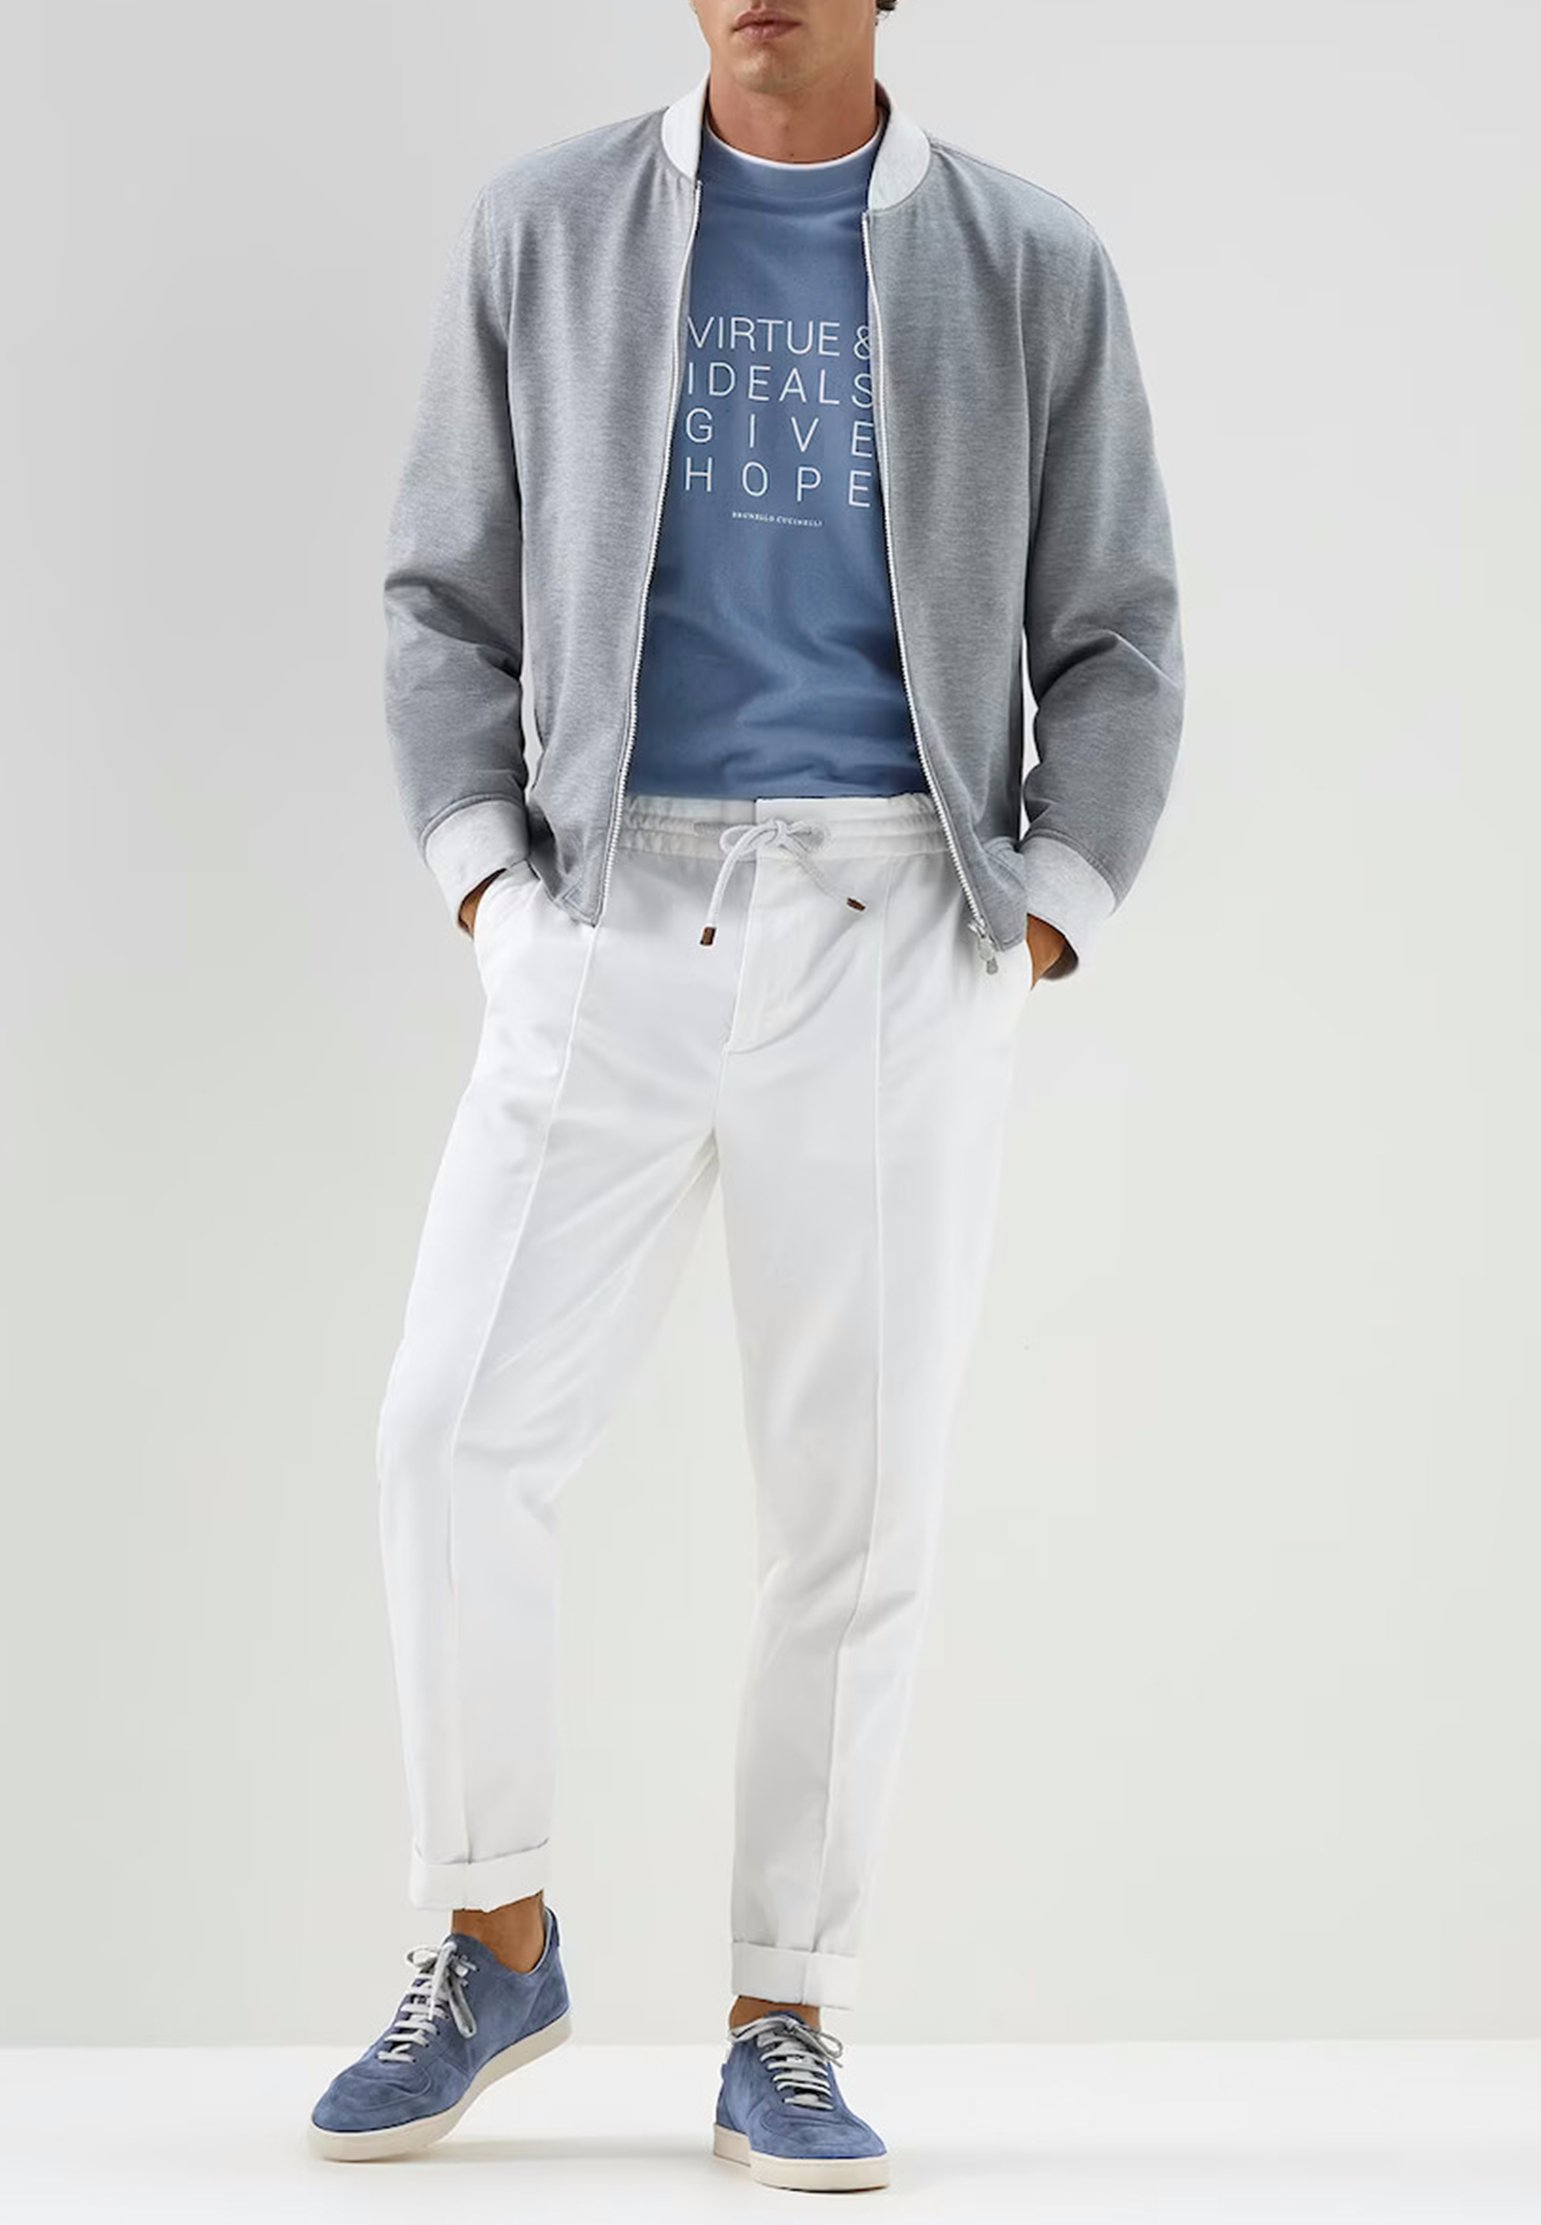 Pants BRUNELLO CUCINELLI Color: white (Code: 477) in online store Allure